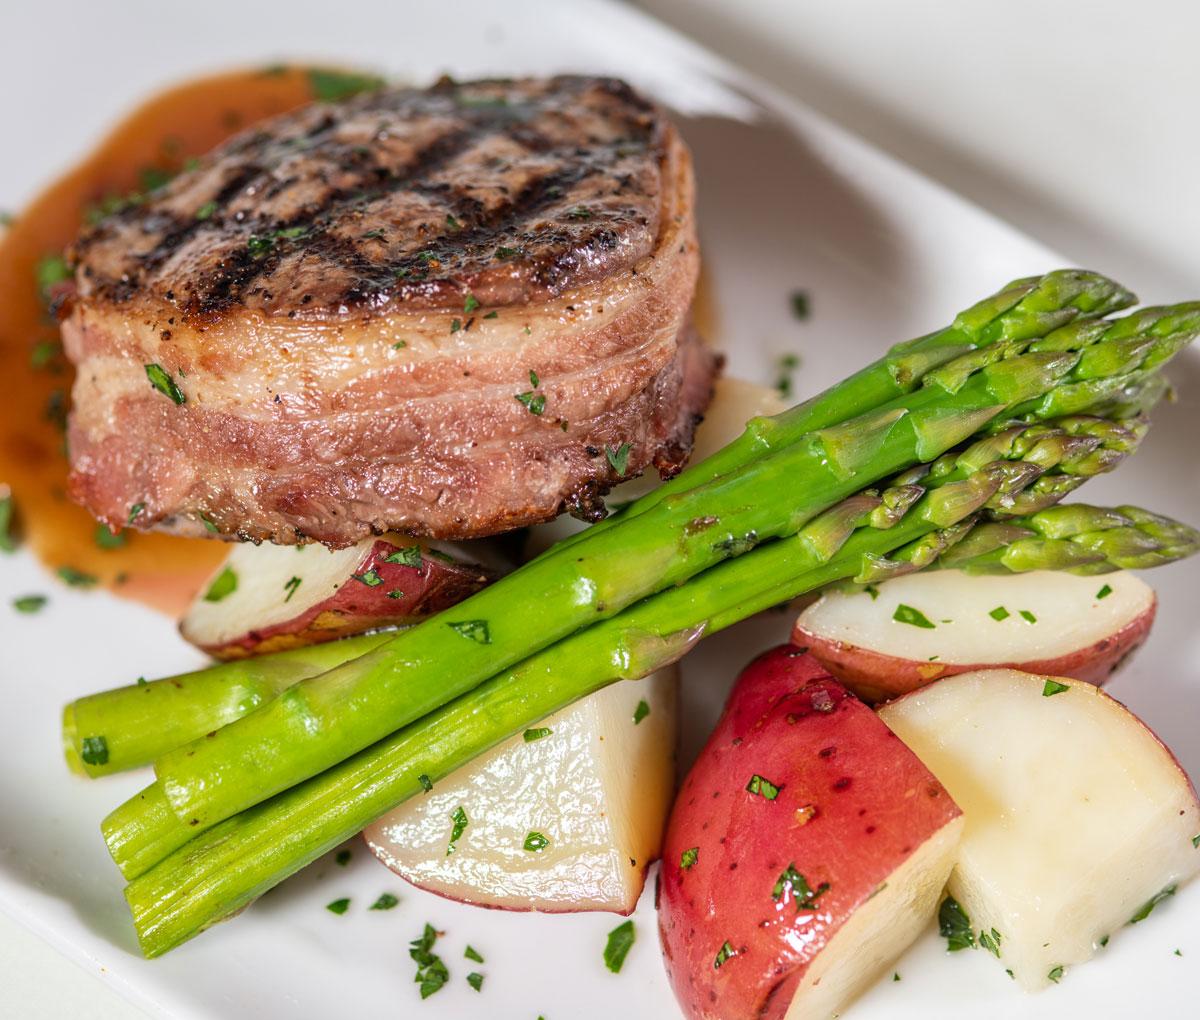 Elegant Dinner of steak and asparagus